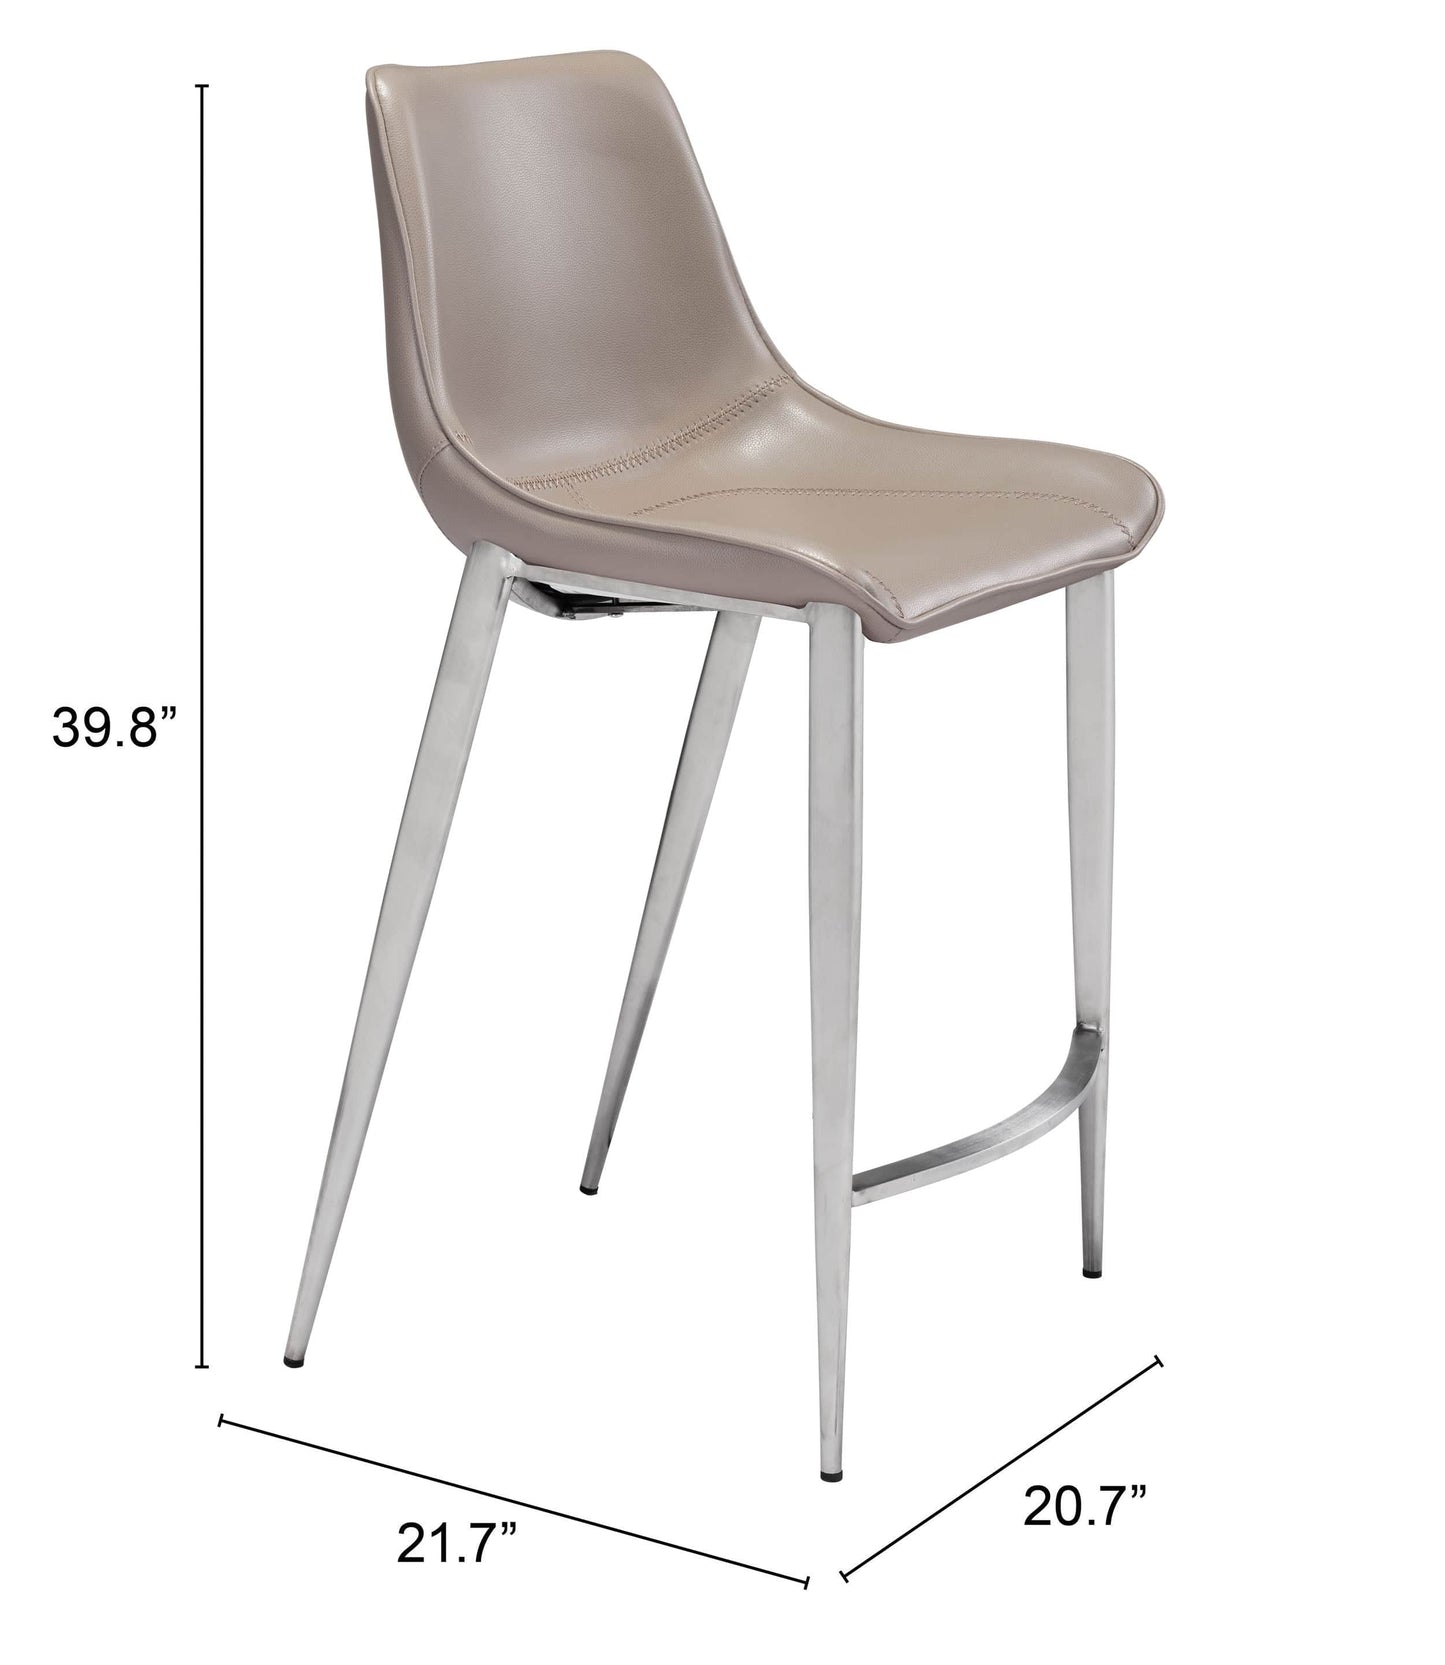 Measurements of Magnus counter stool